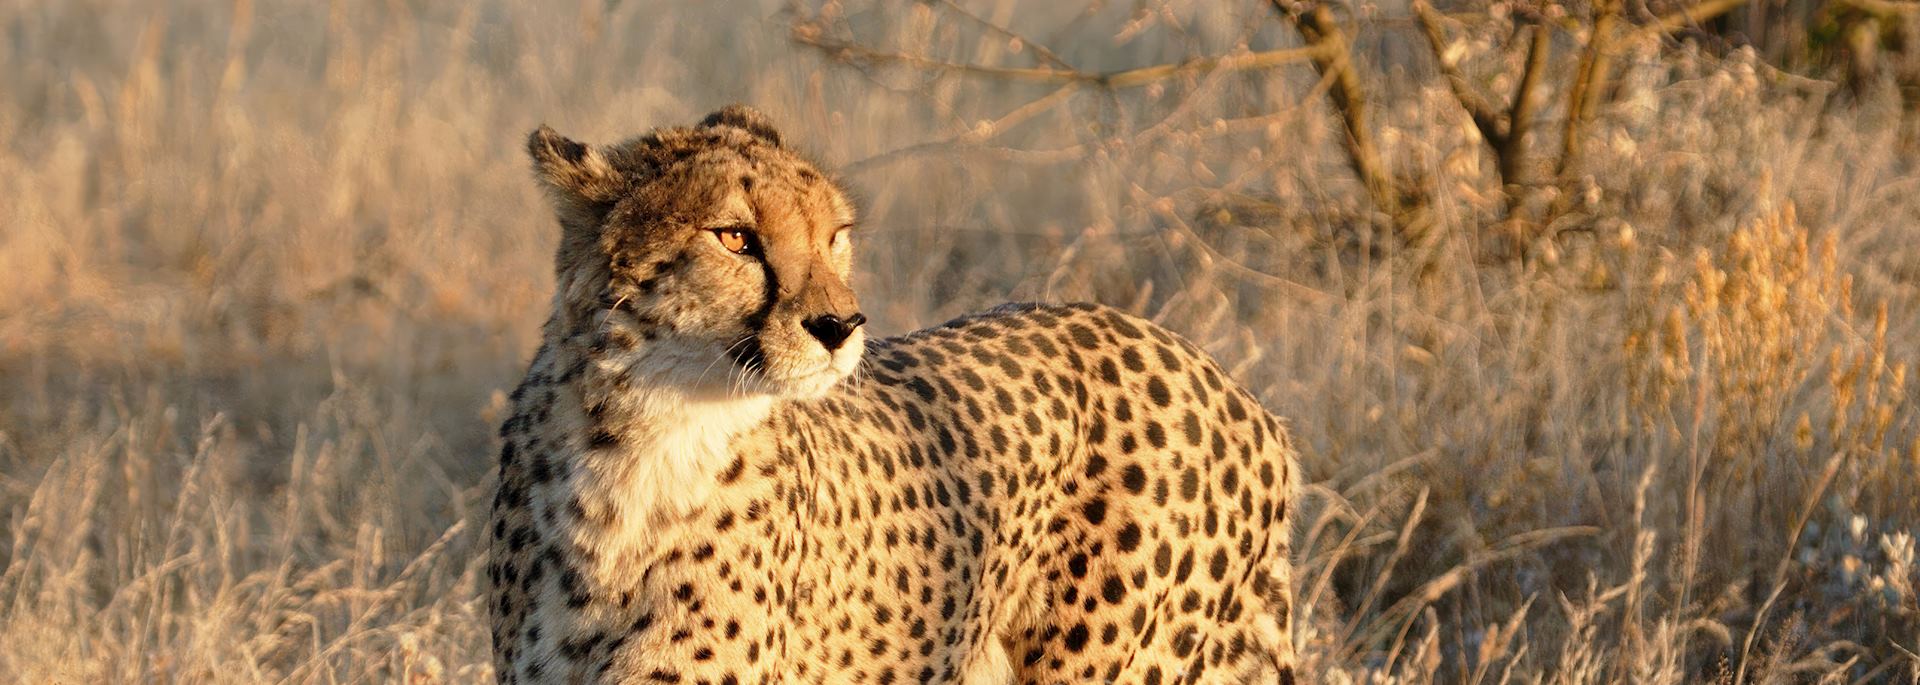 Cheetah in Etosha National Park